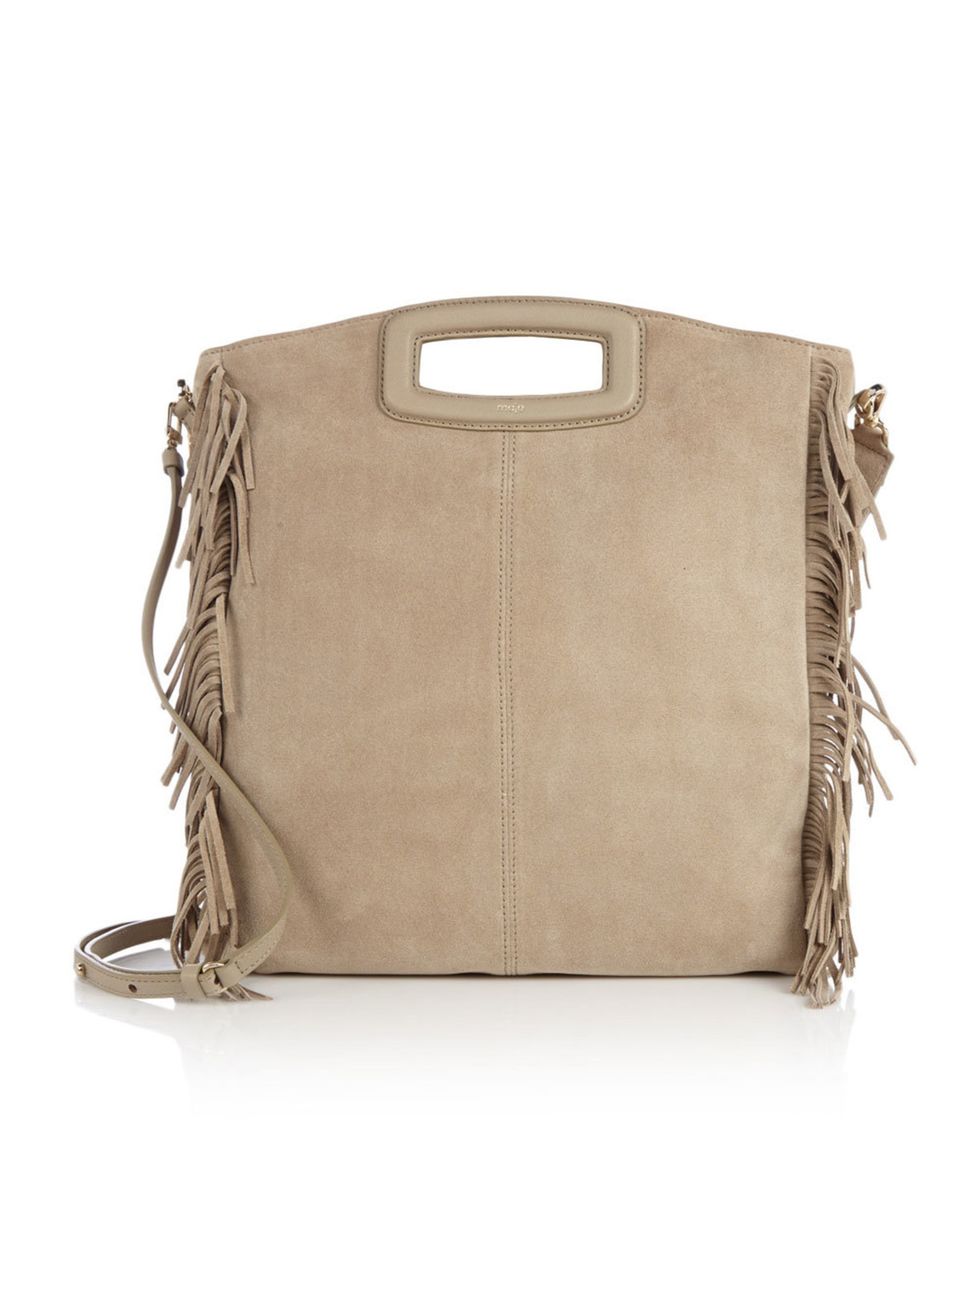 Brown, Textile, Bag, Khaki, Tan, Leather, Luggage and bags, Beige, Pocket, Shoulder bag, 